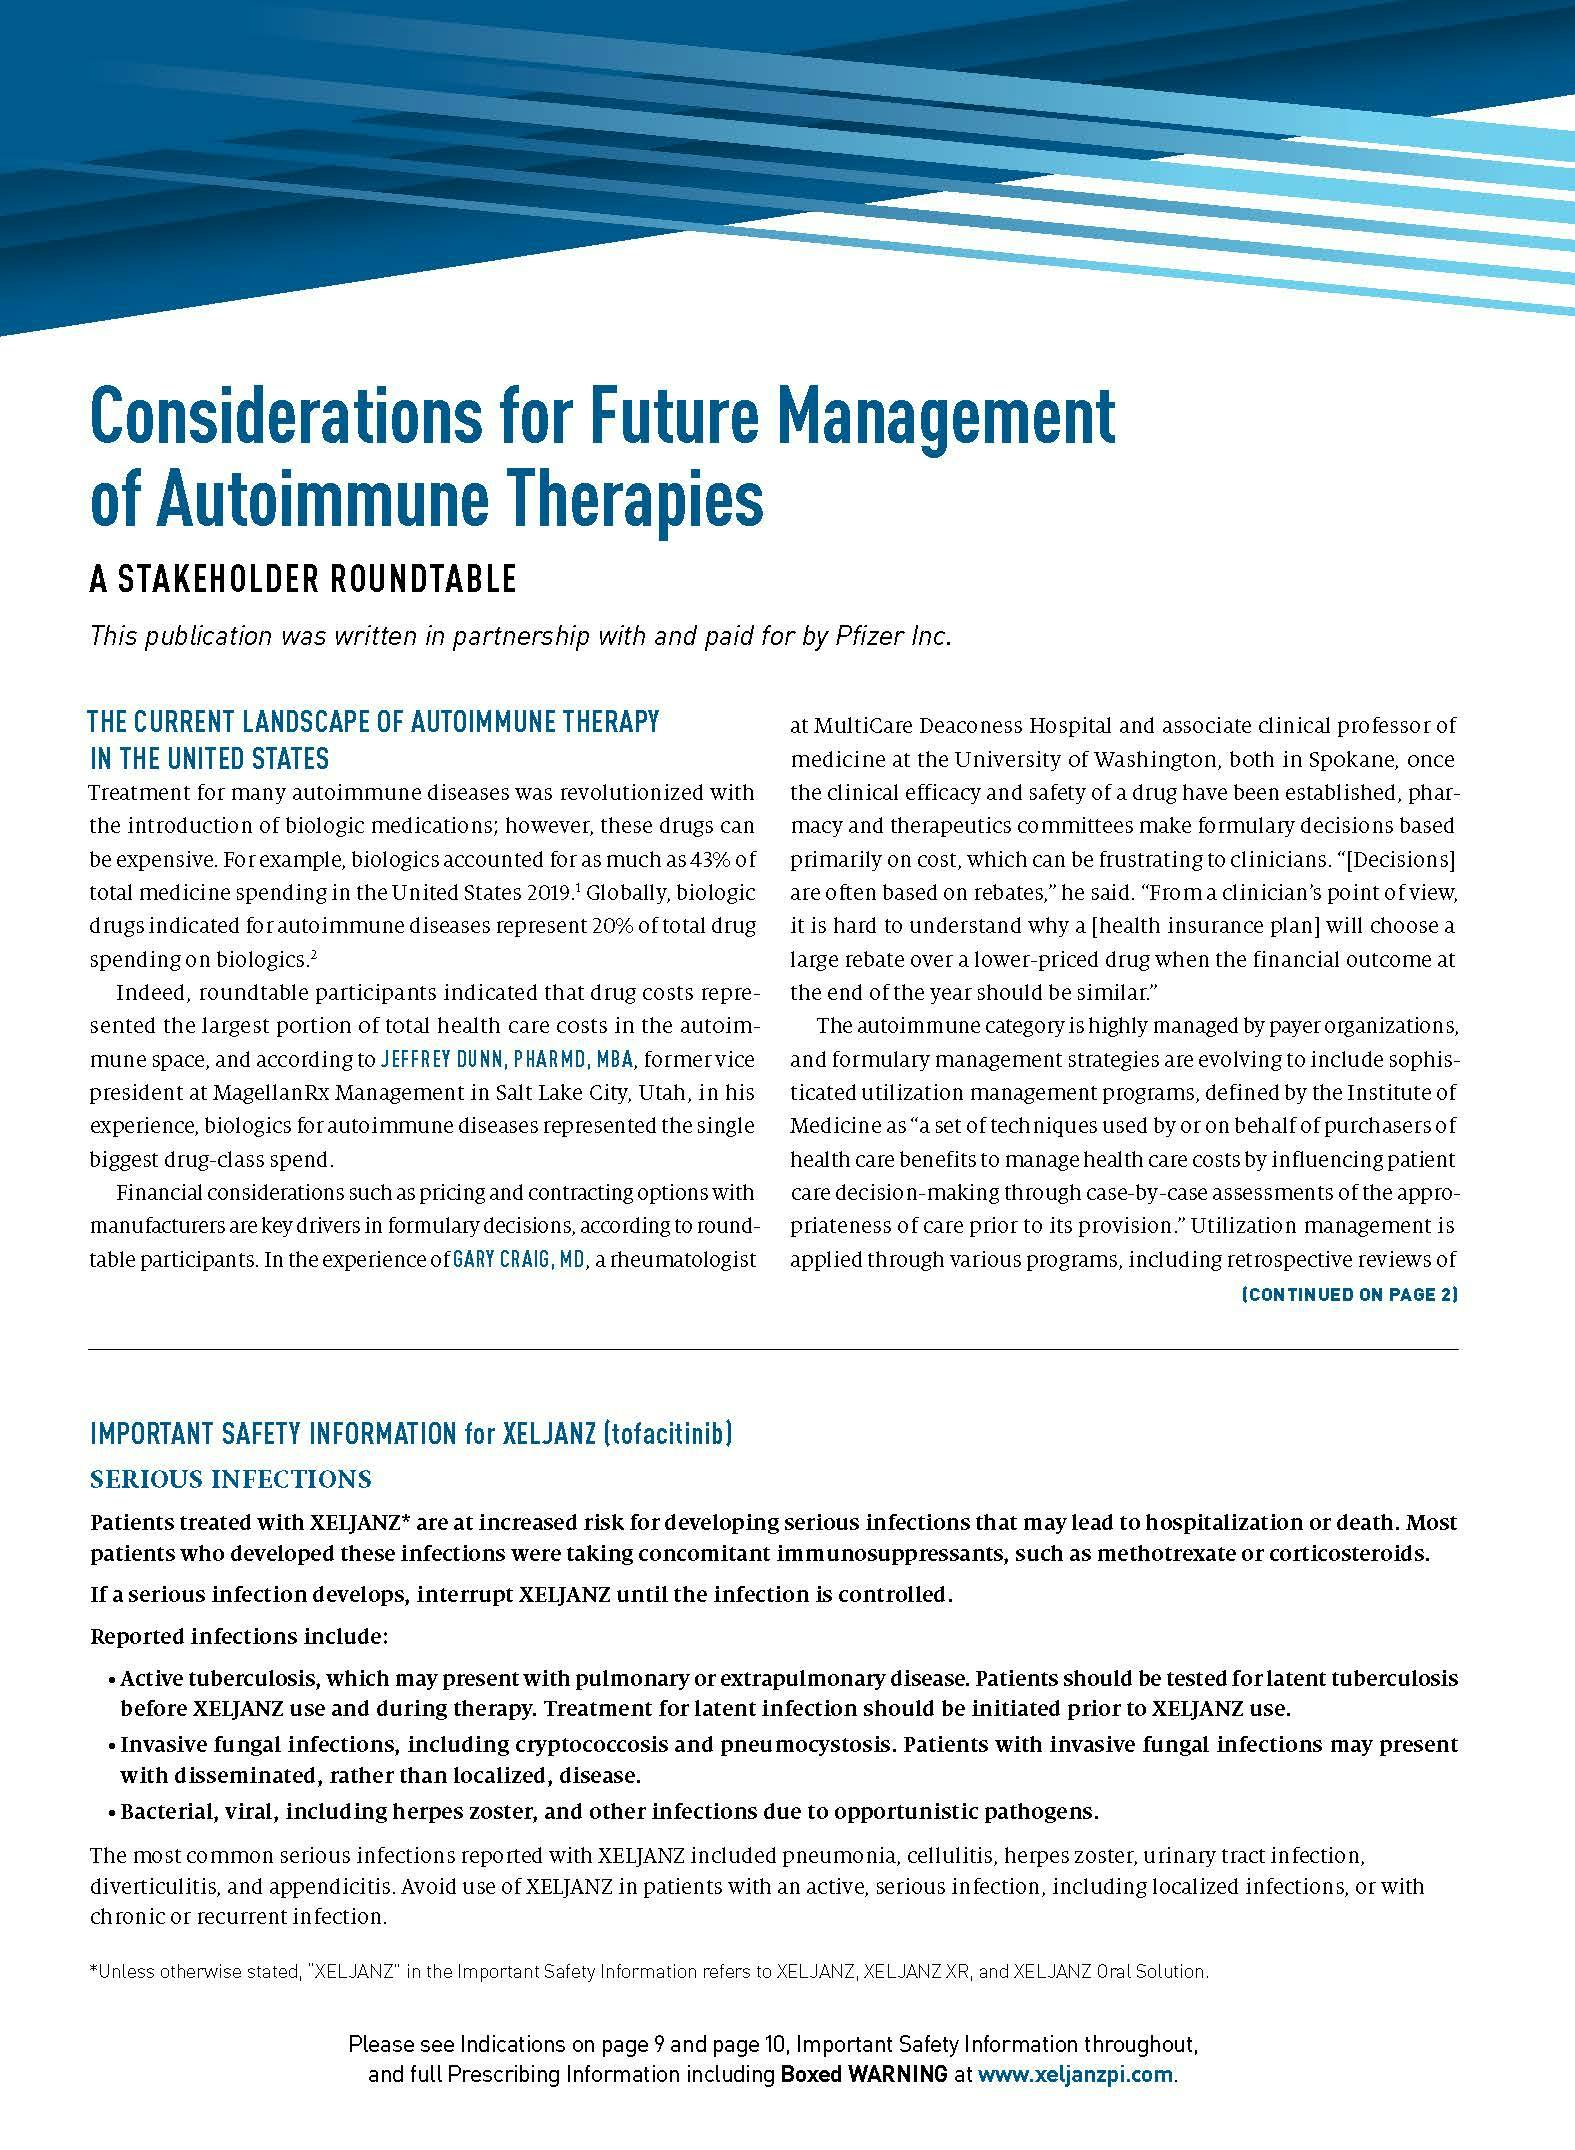 Considerations for Future Management of Autoimmune Therapies